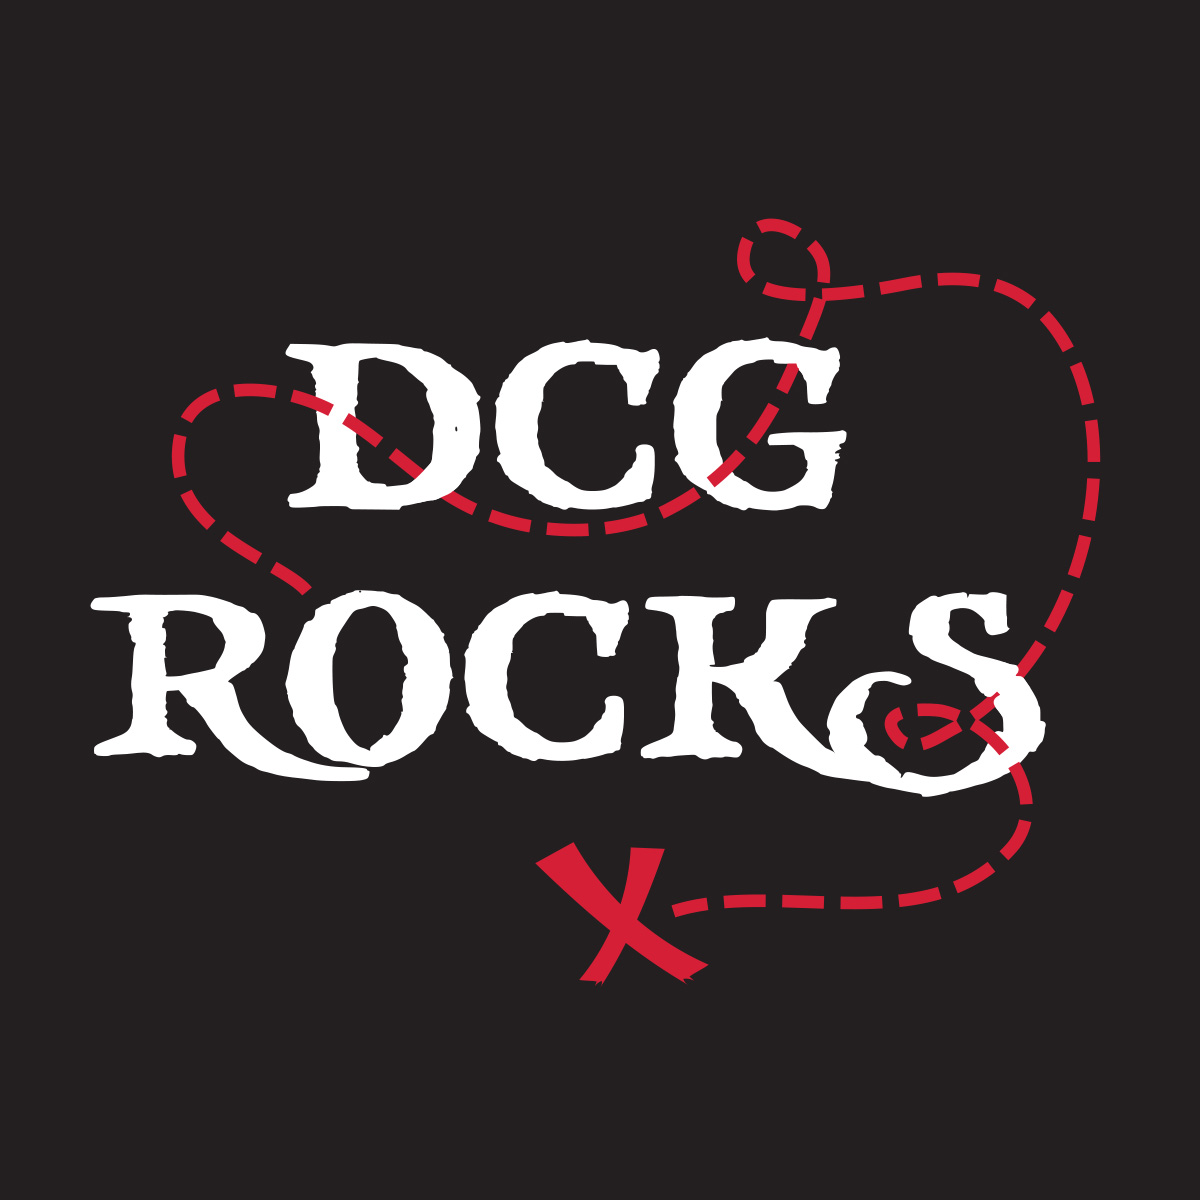 DCG Rocks